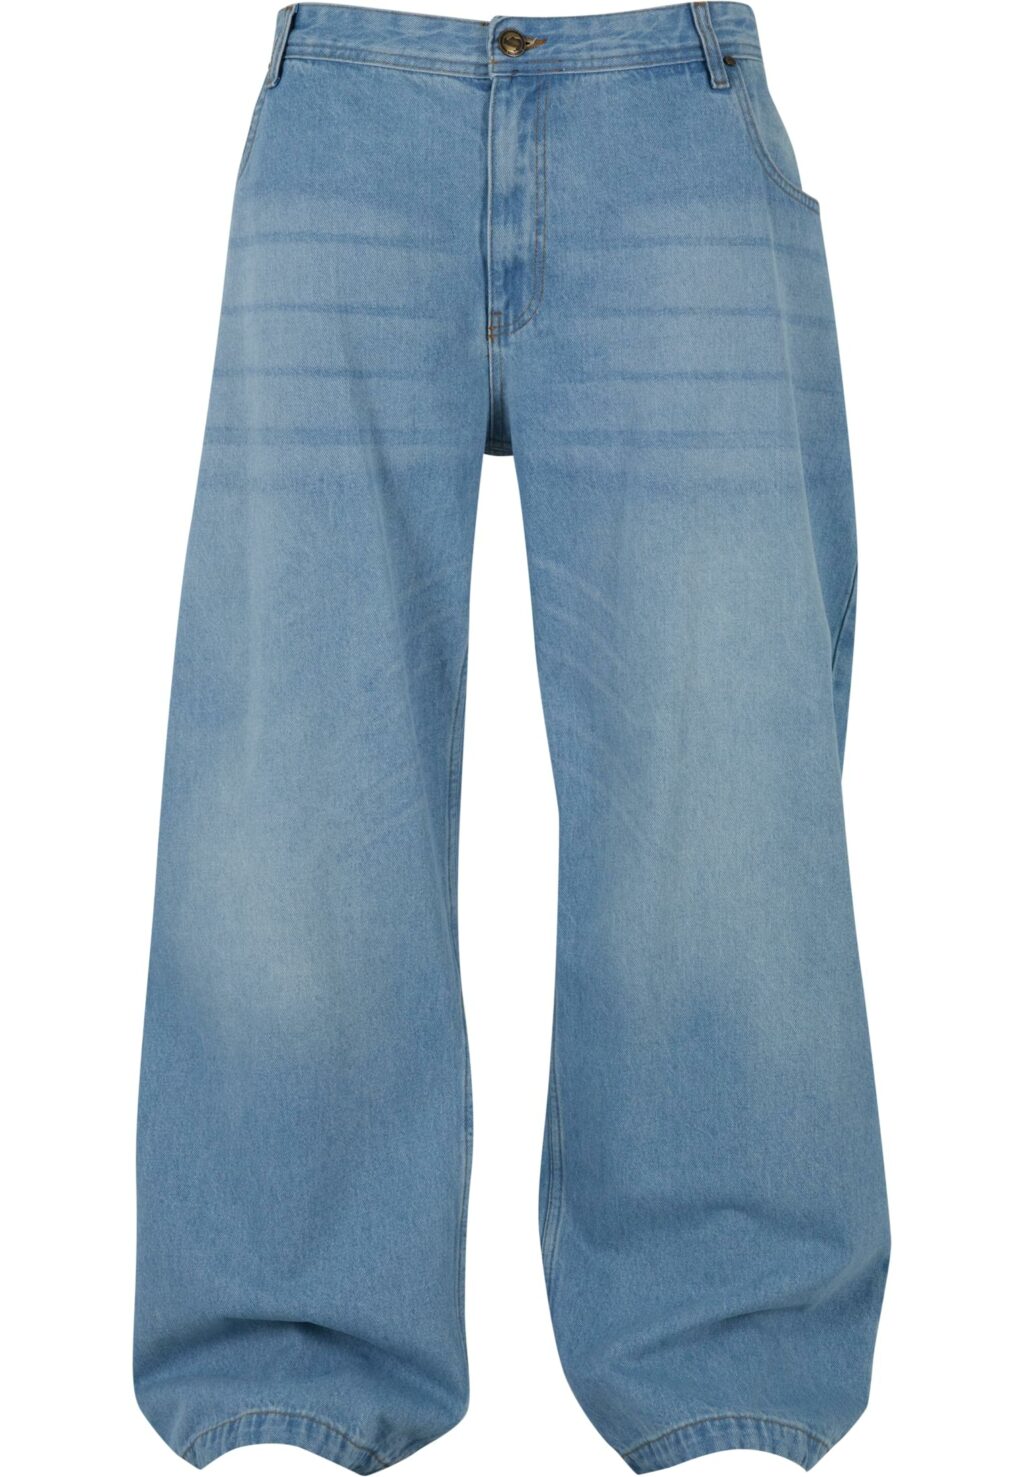 Ecko Unltd. Hang Loose Fit Jeans light blue denim W42 ECKOJS1002